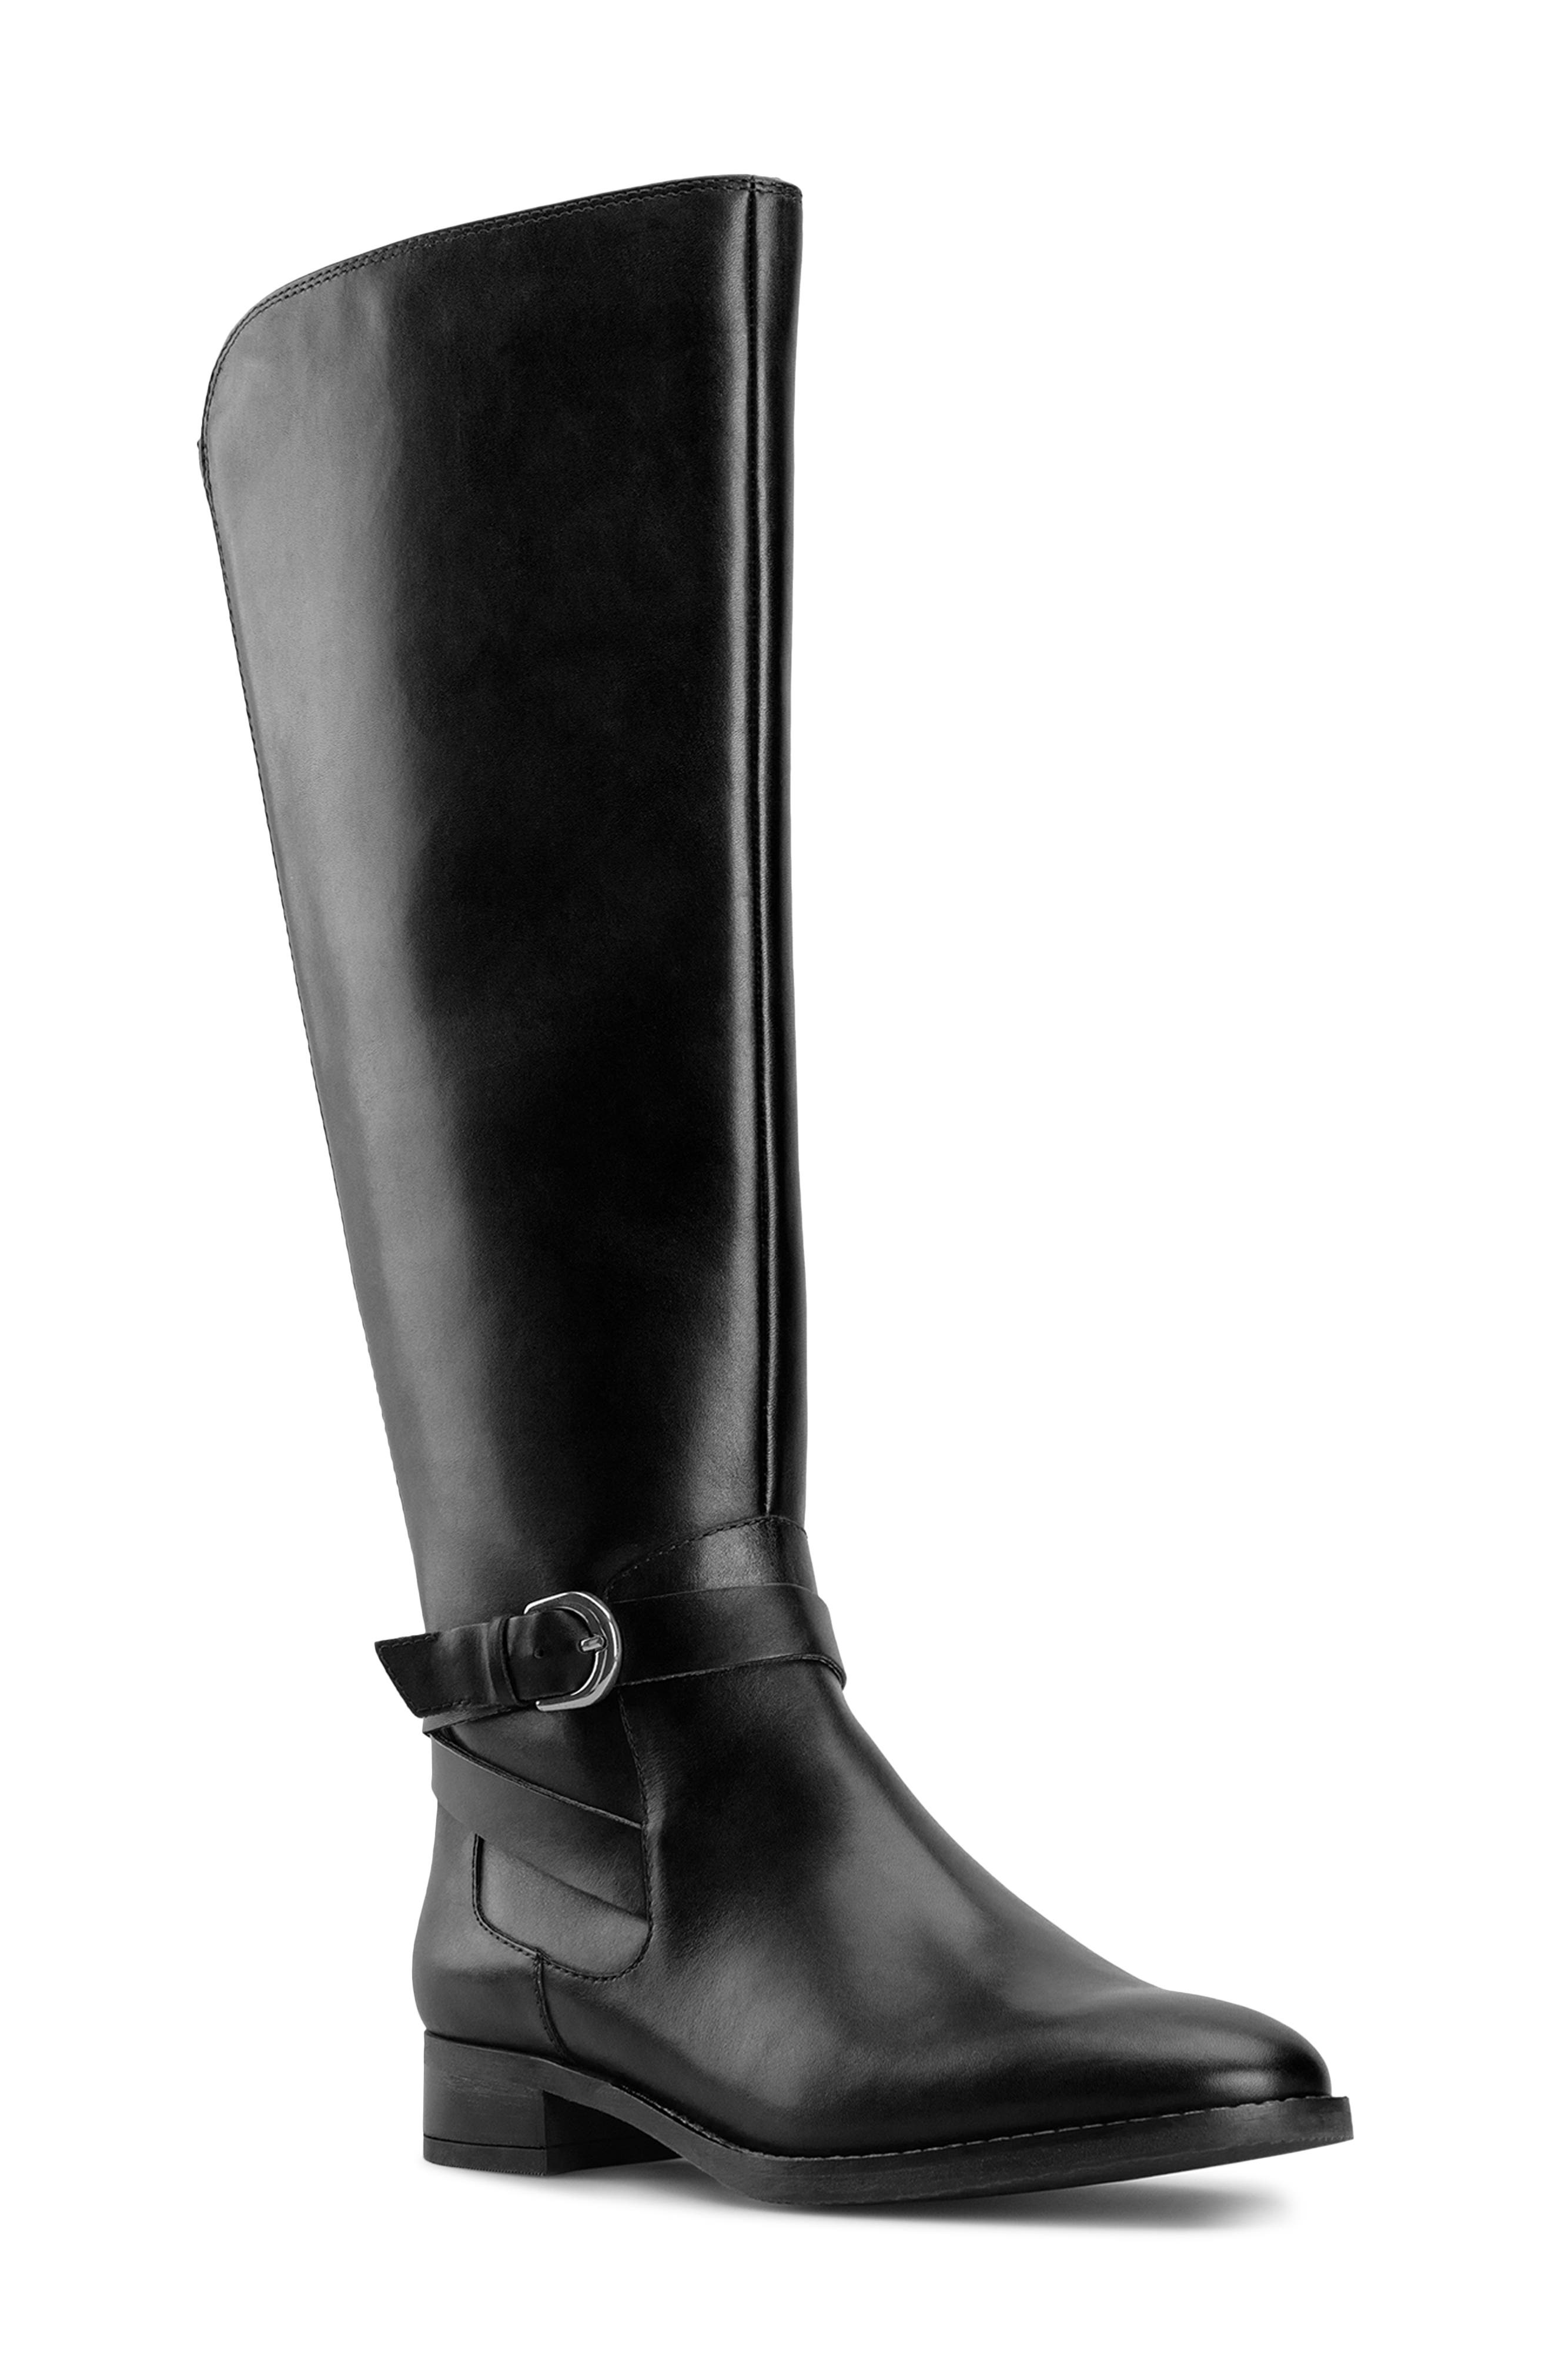 clarks womens wide calf boots